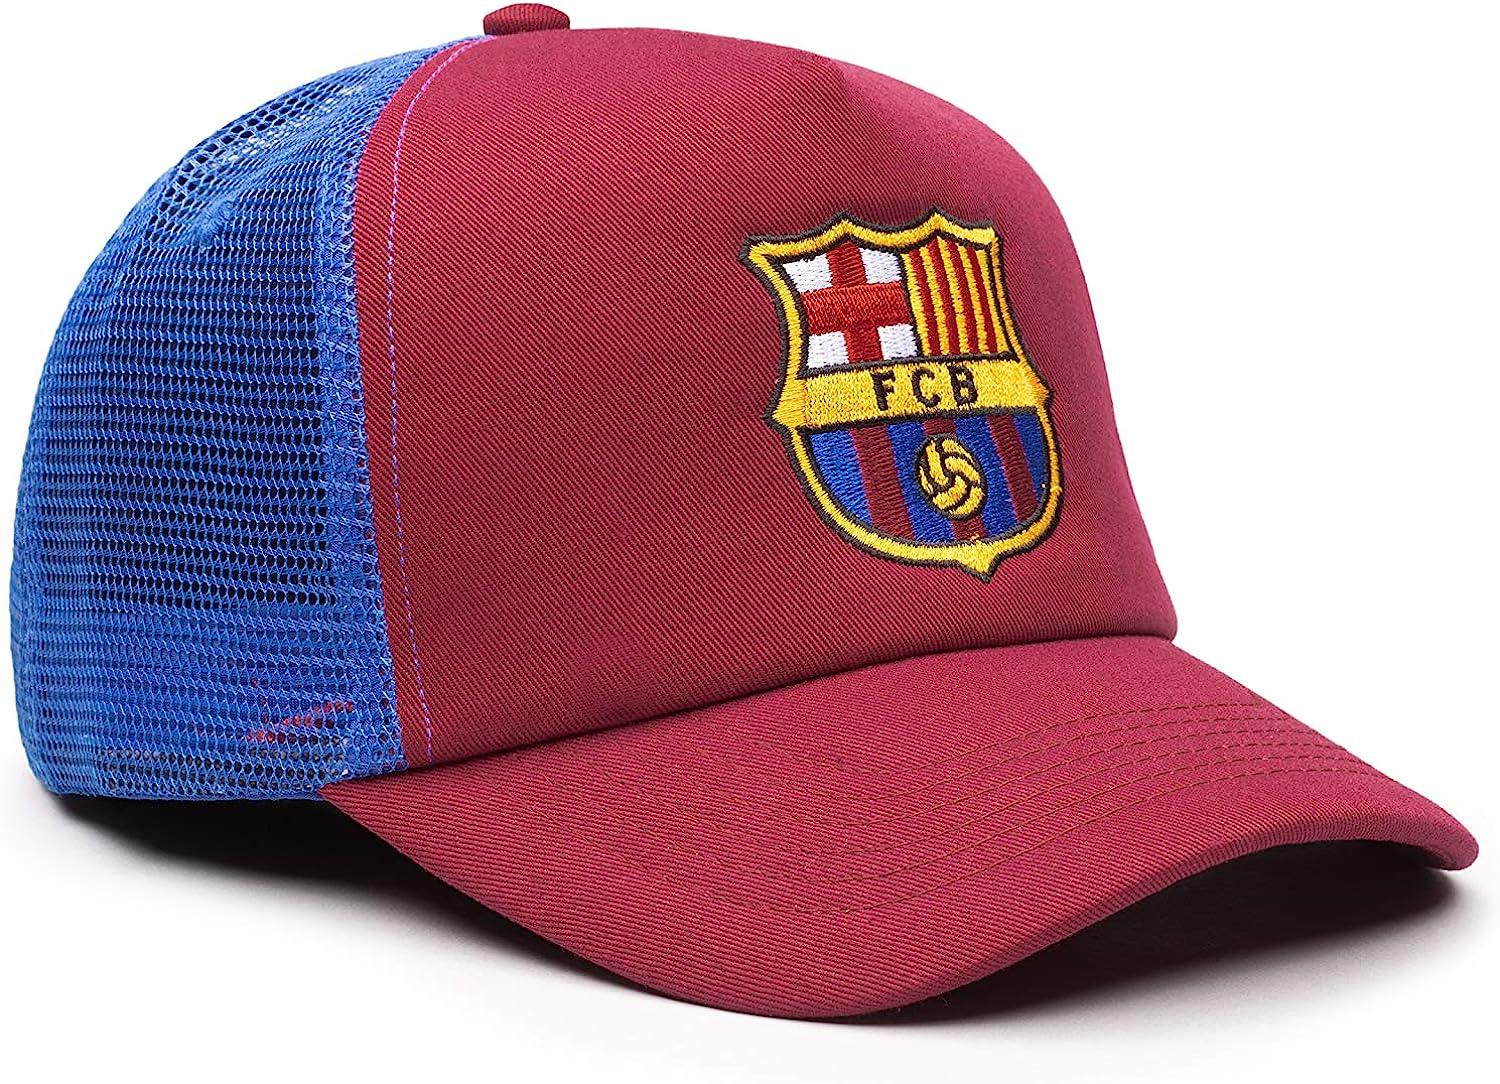 Best hat maker Barcelona